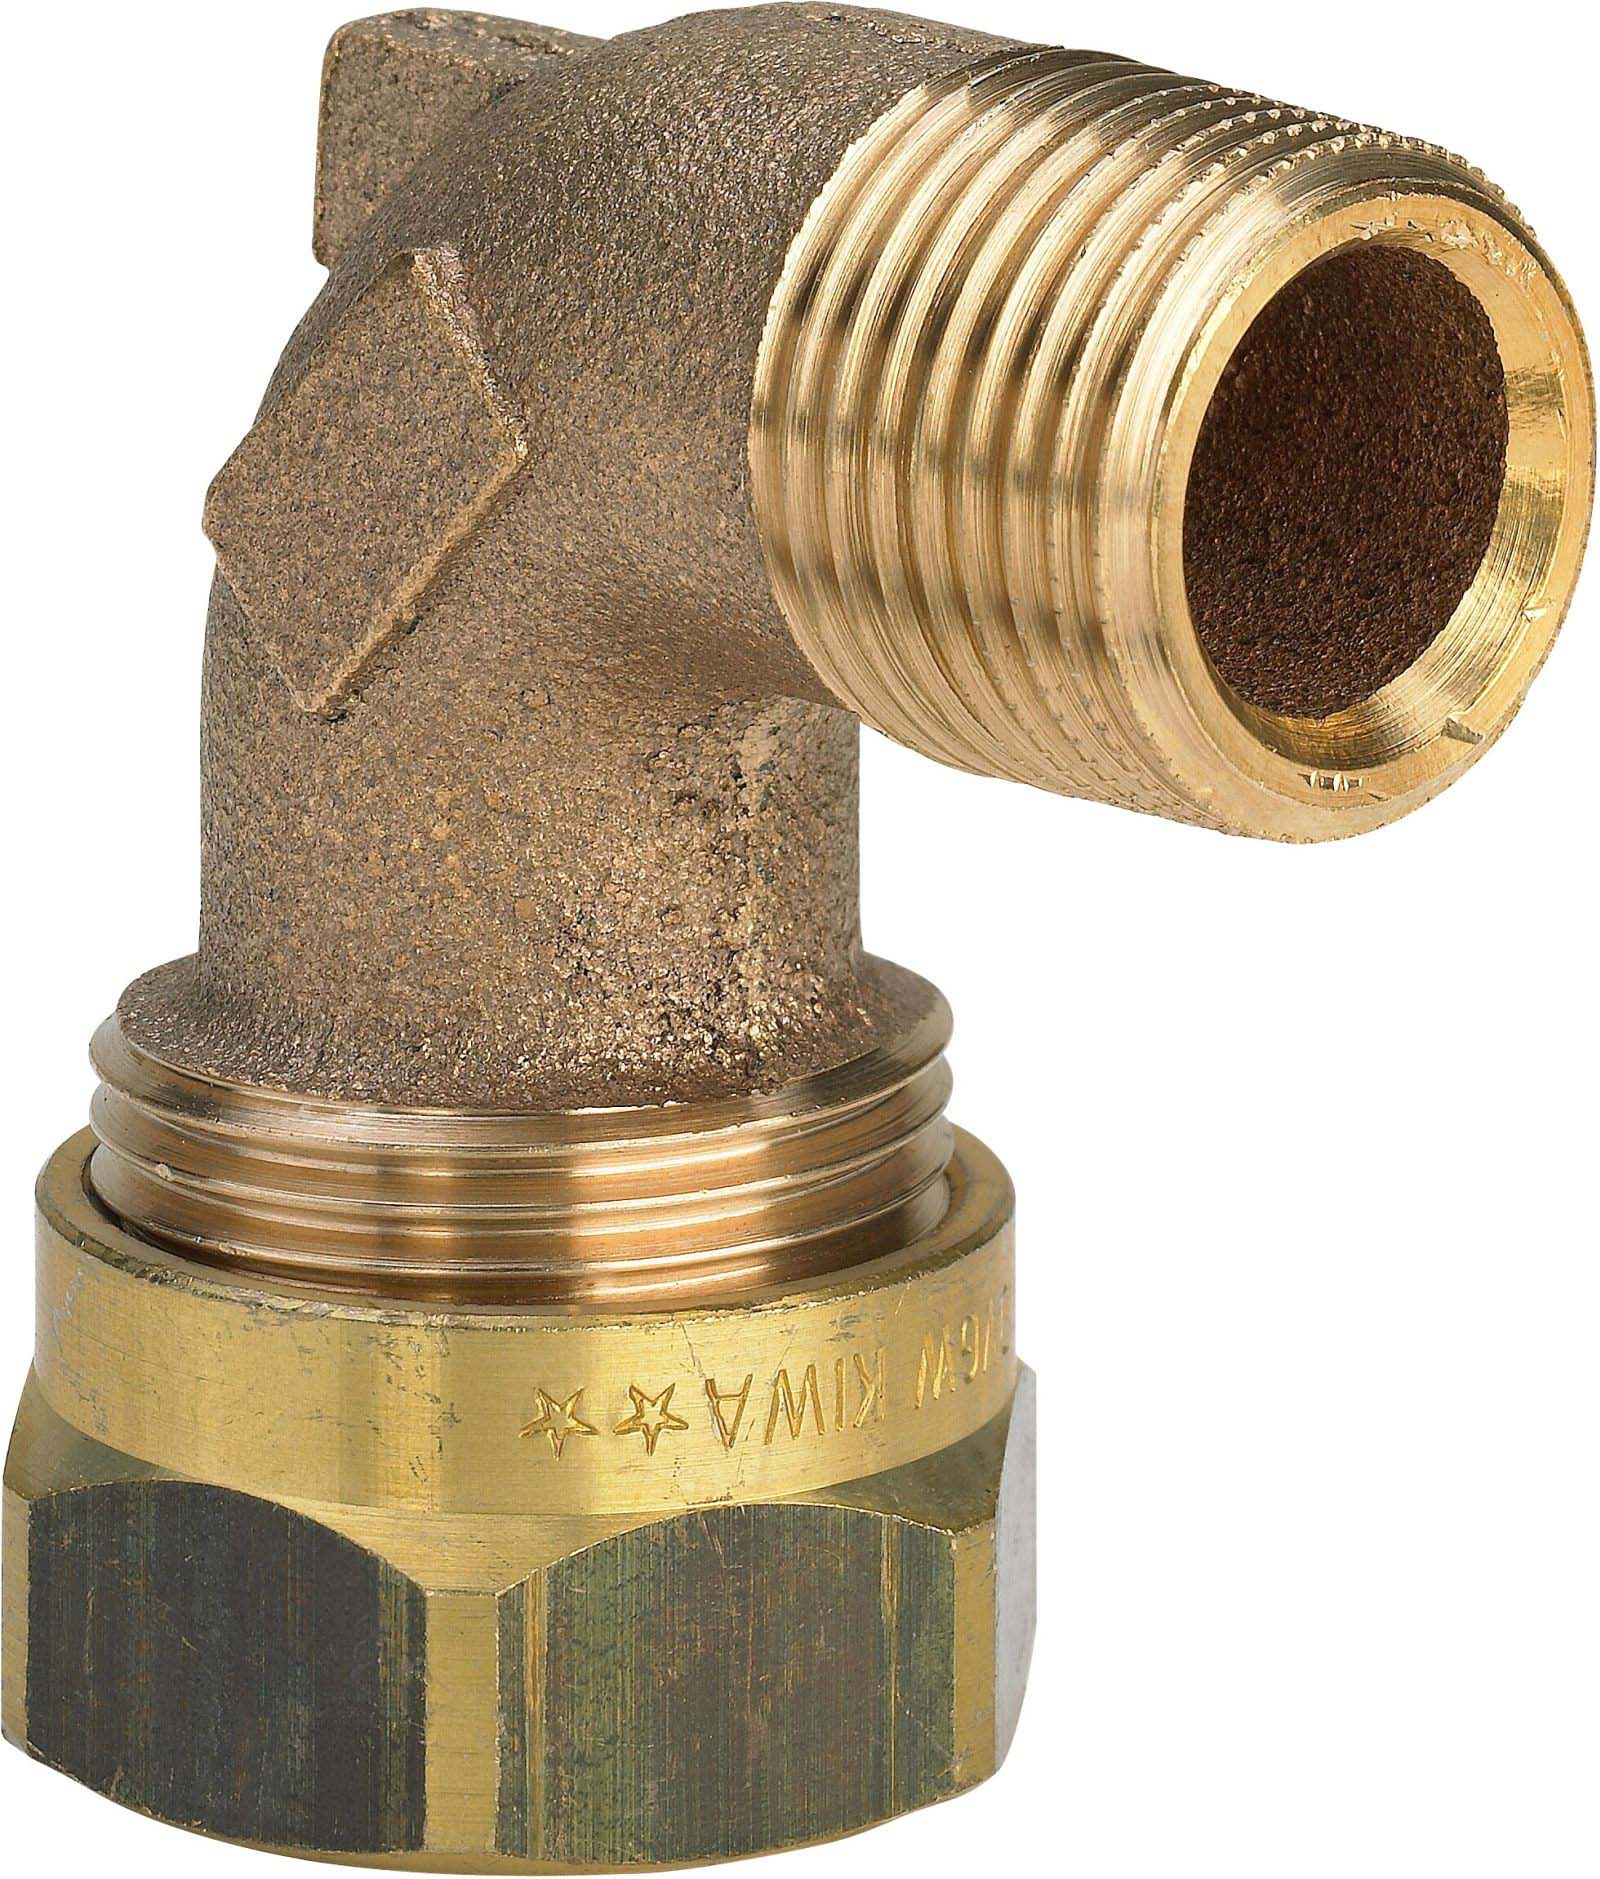 Viega raccord coudé 101954 16mmxR 2000 / 2, bronze à canon, coudé